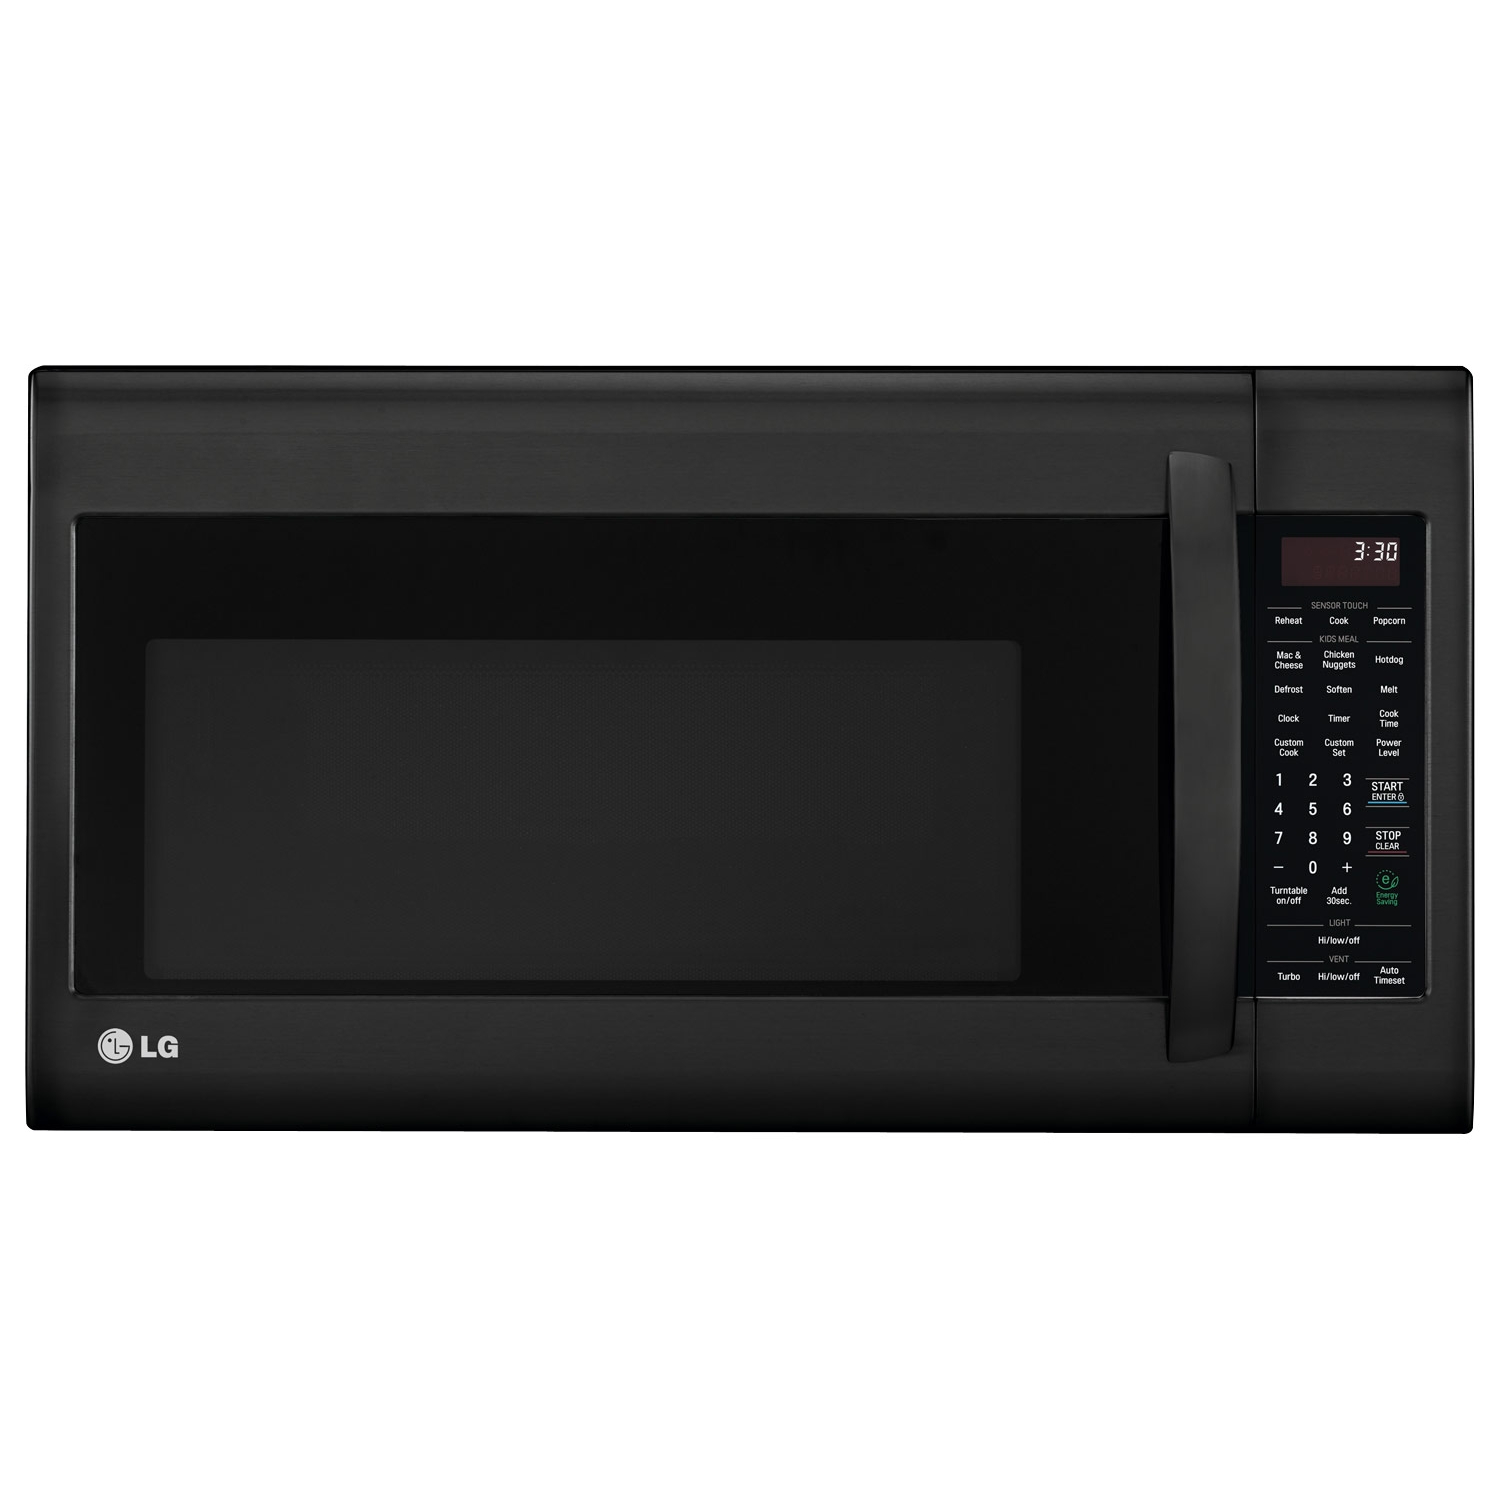 LG Microwave Model LMV2031SB